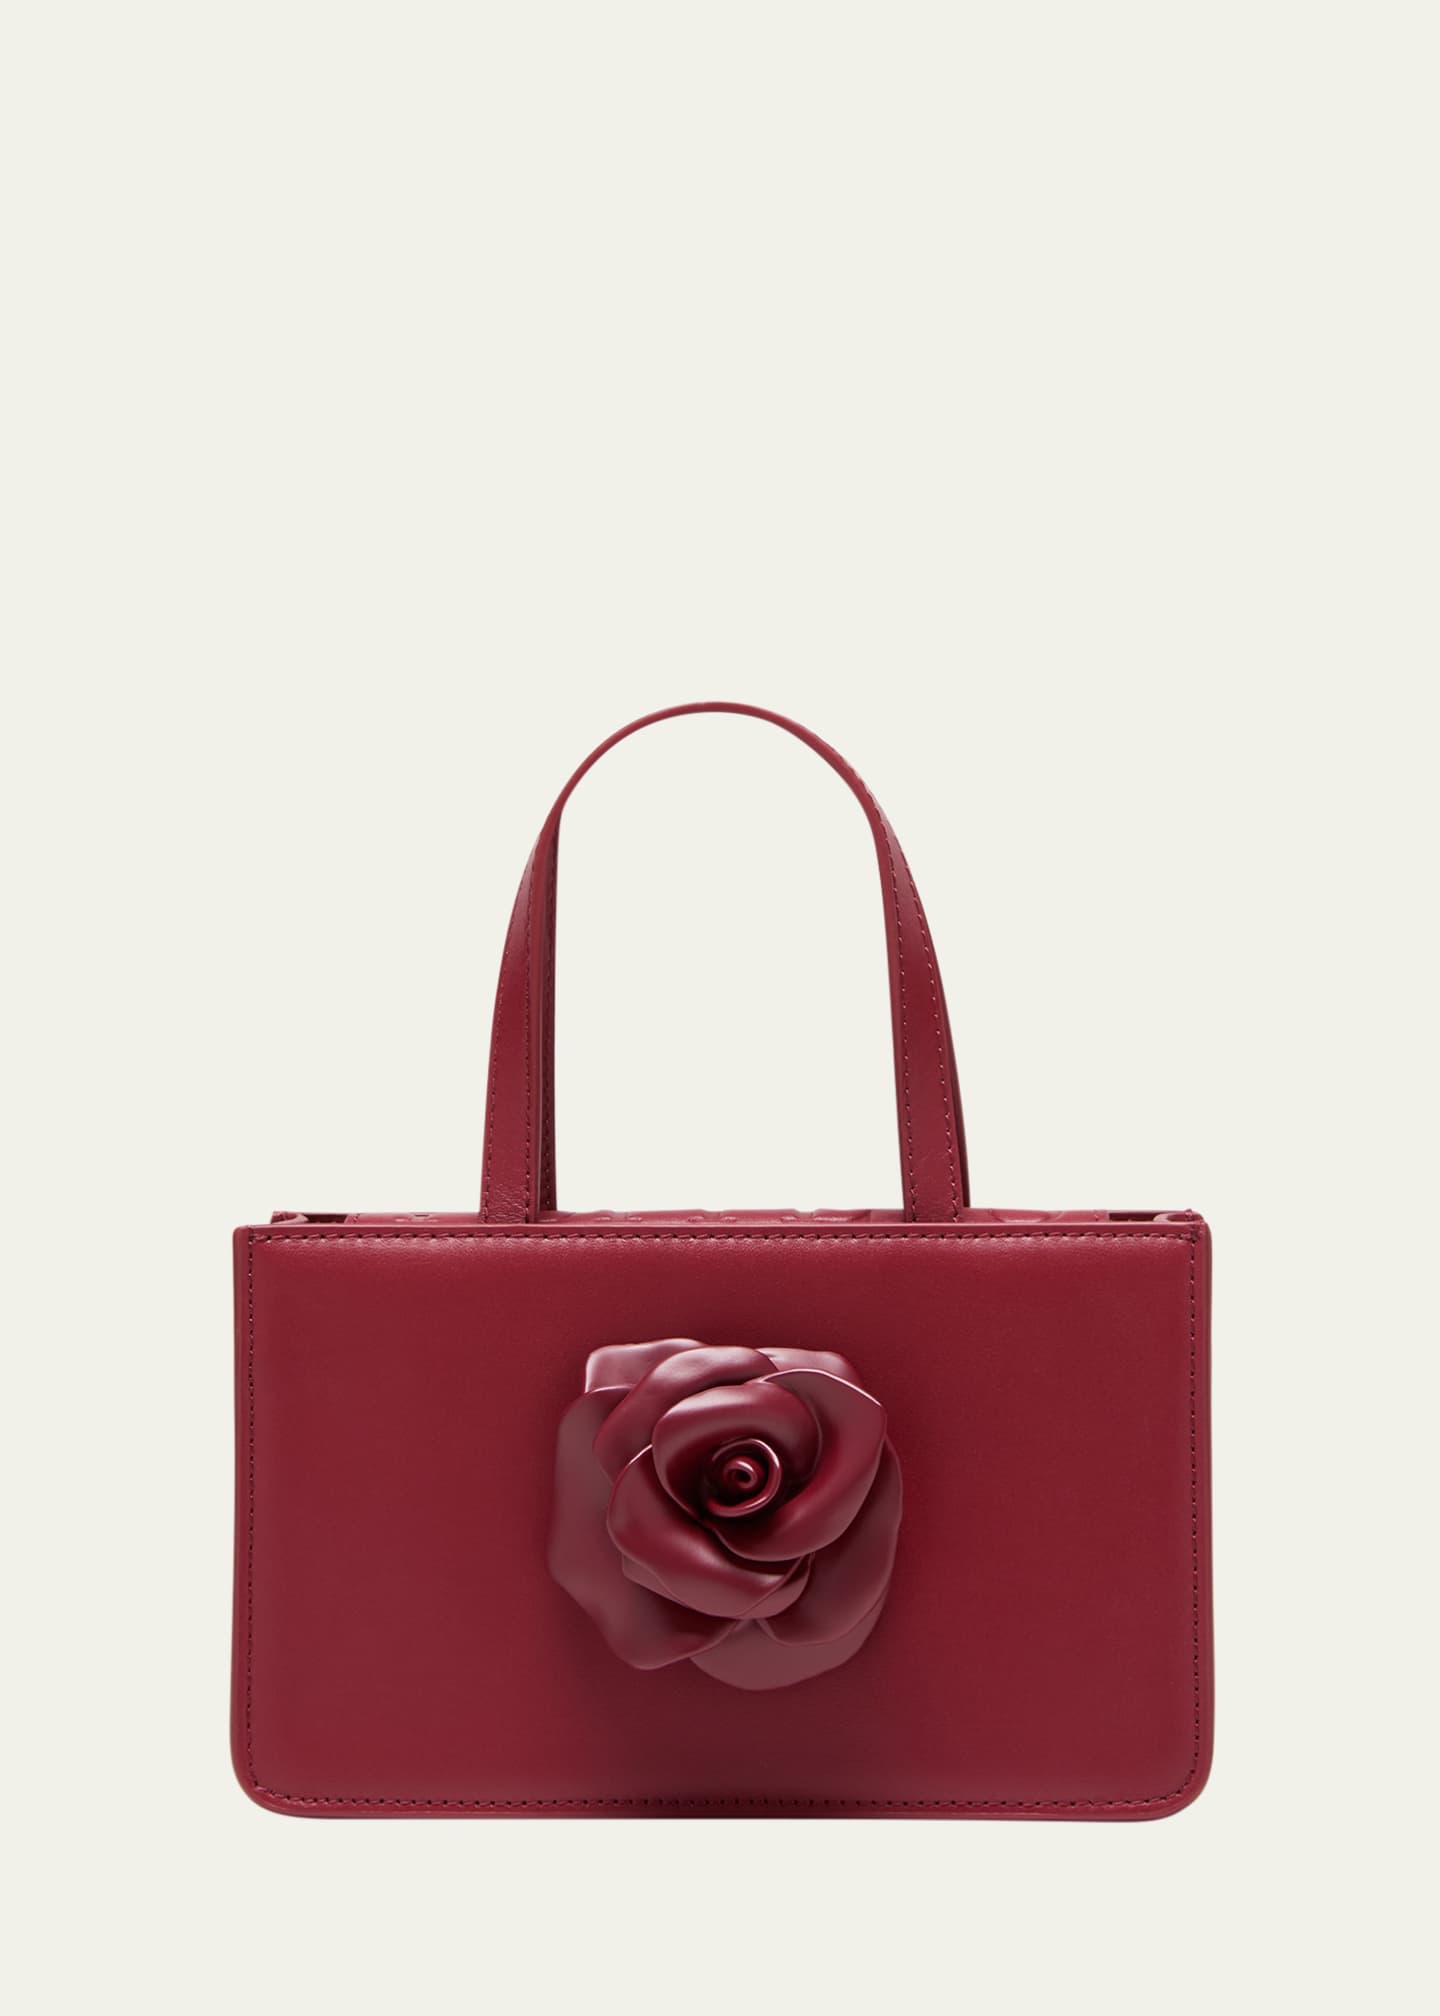 How the heck do you put twillys on bag handles? : r/handbags